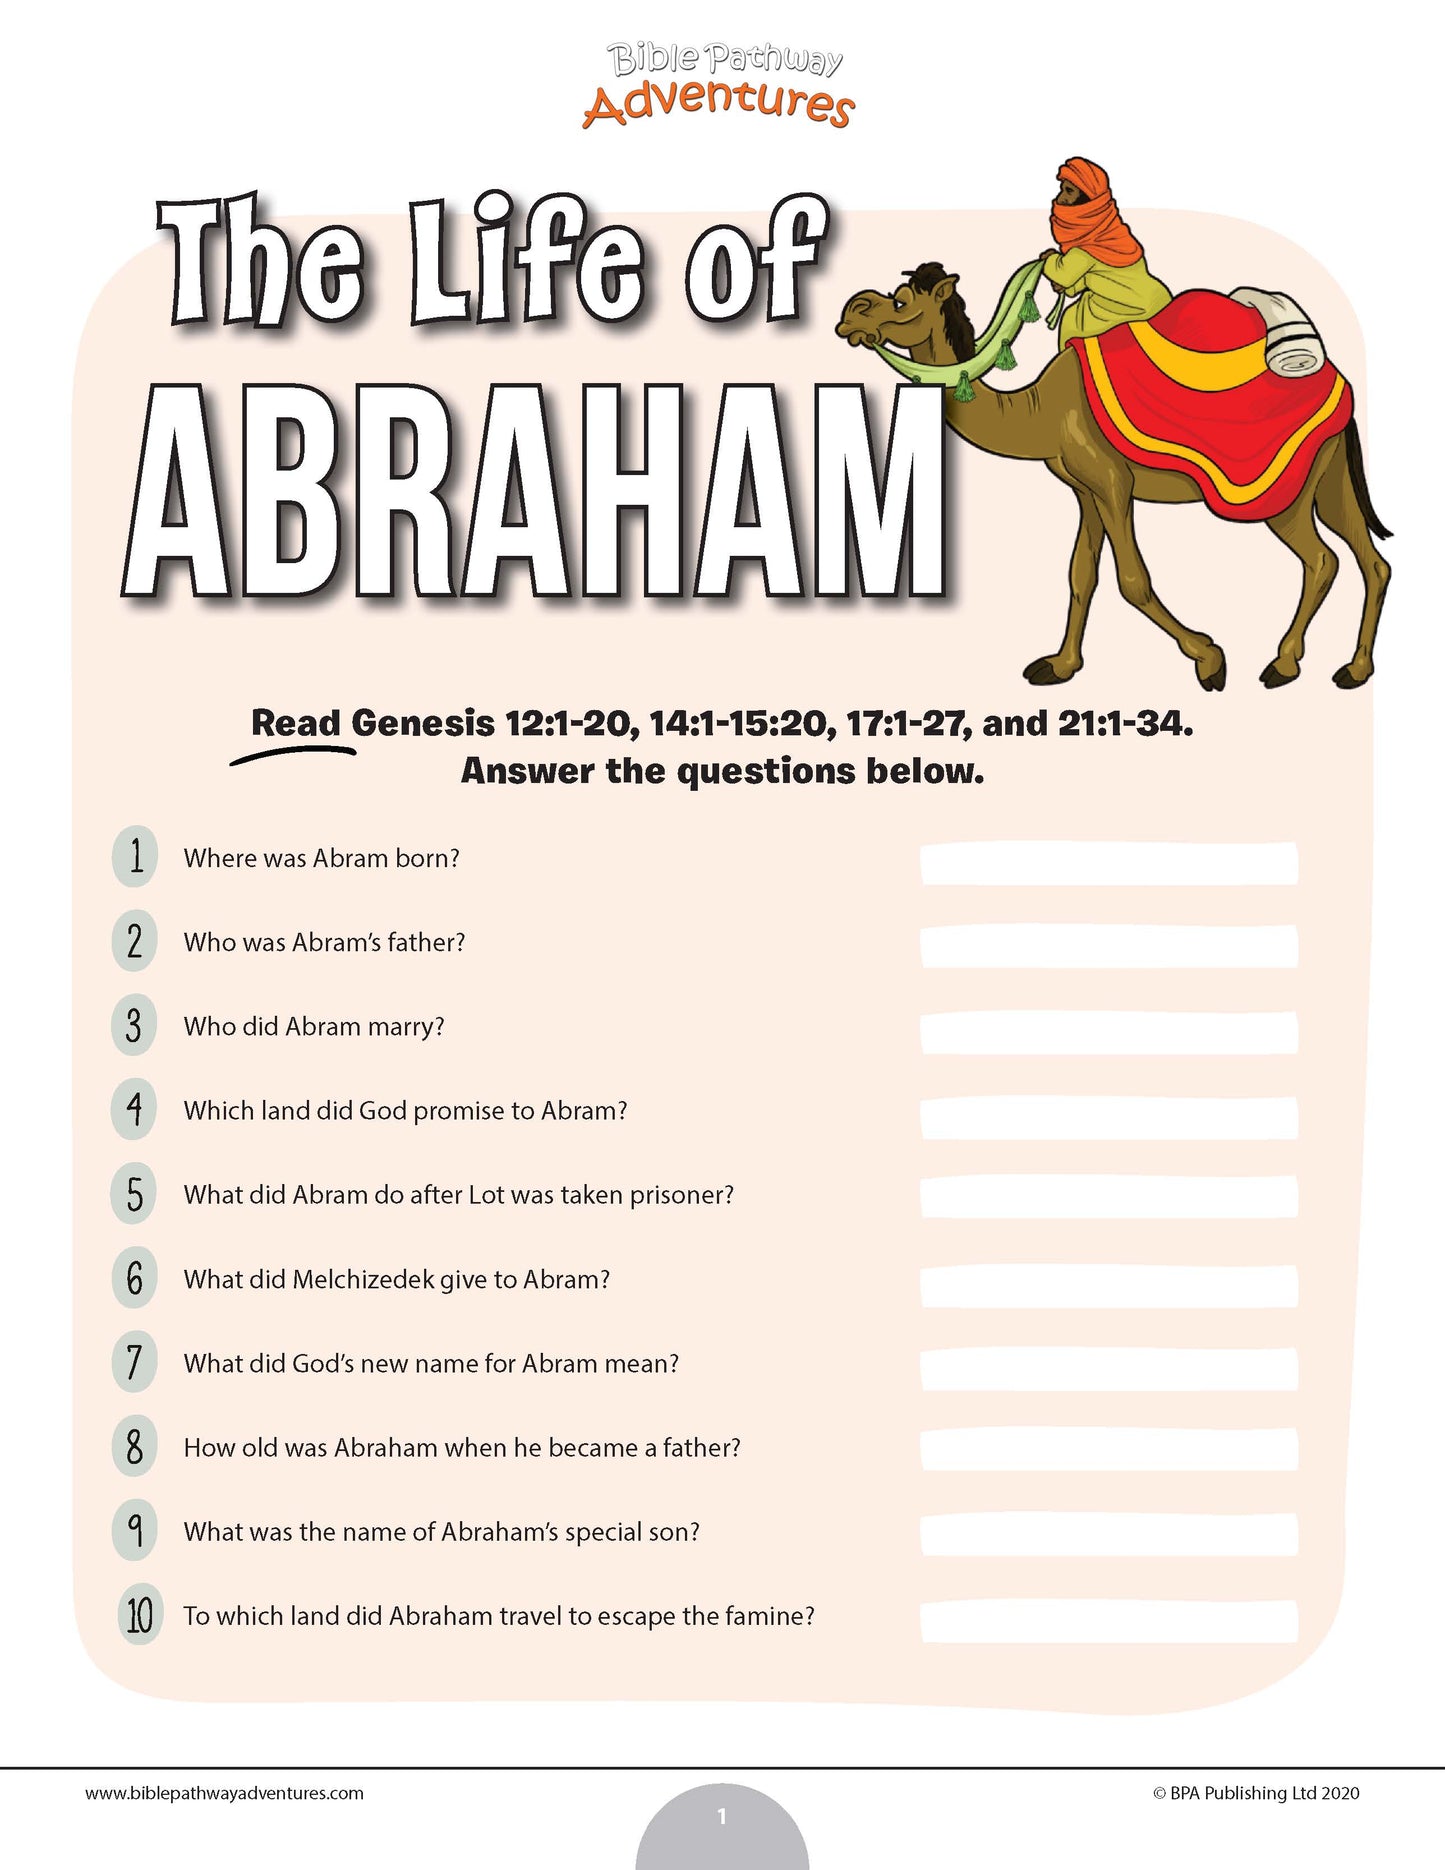 The Life of Abraham quiz